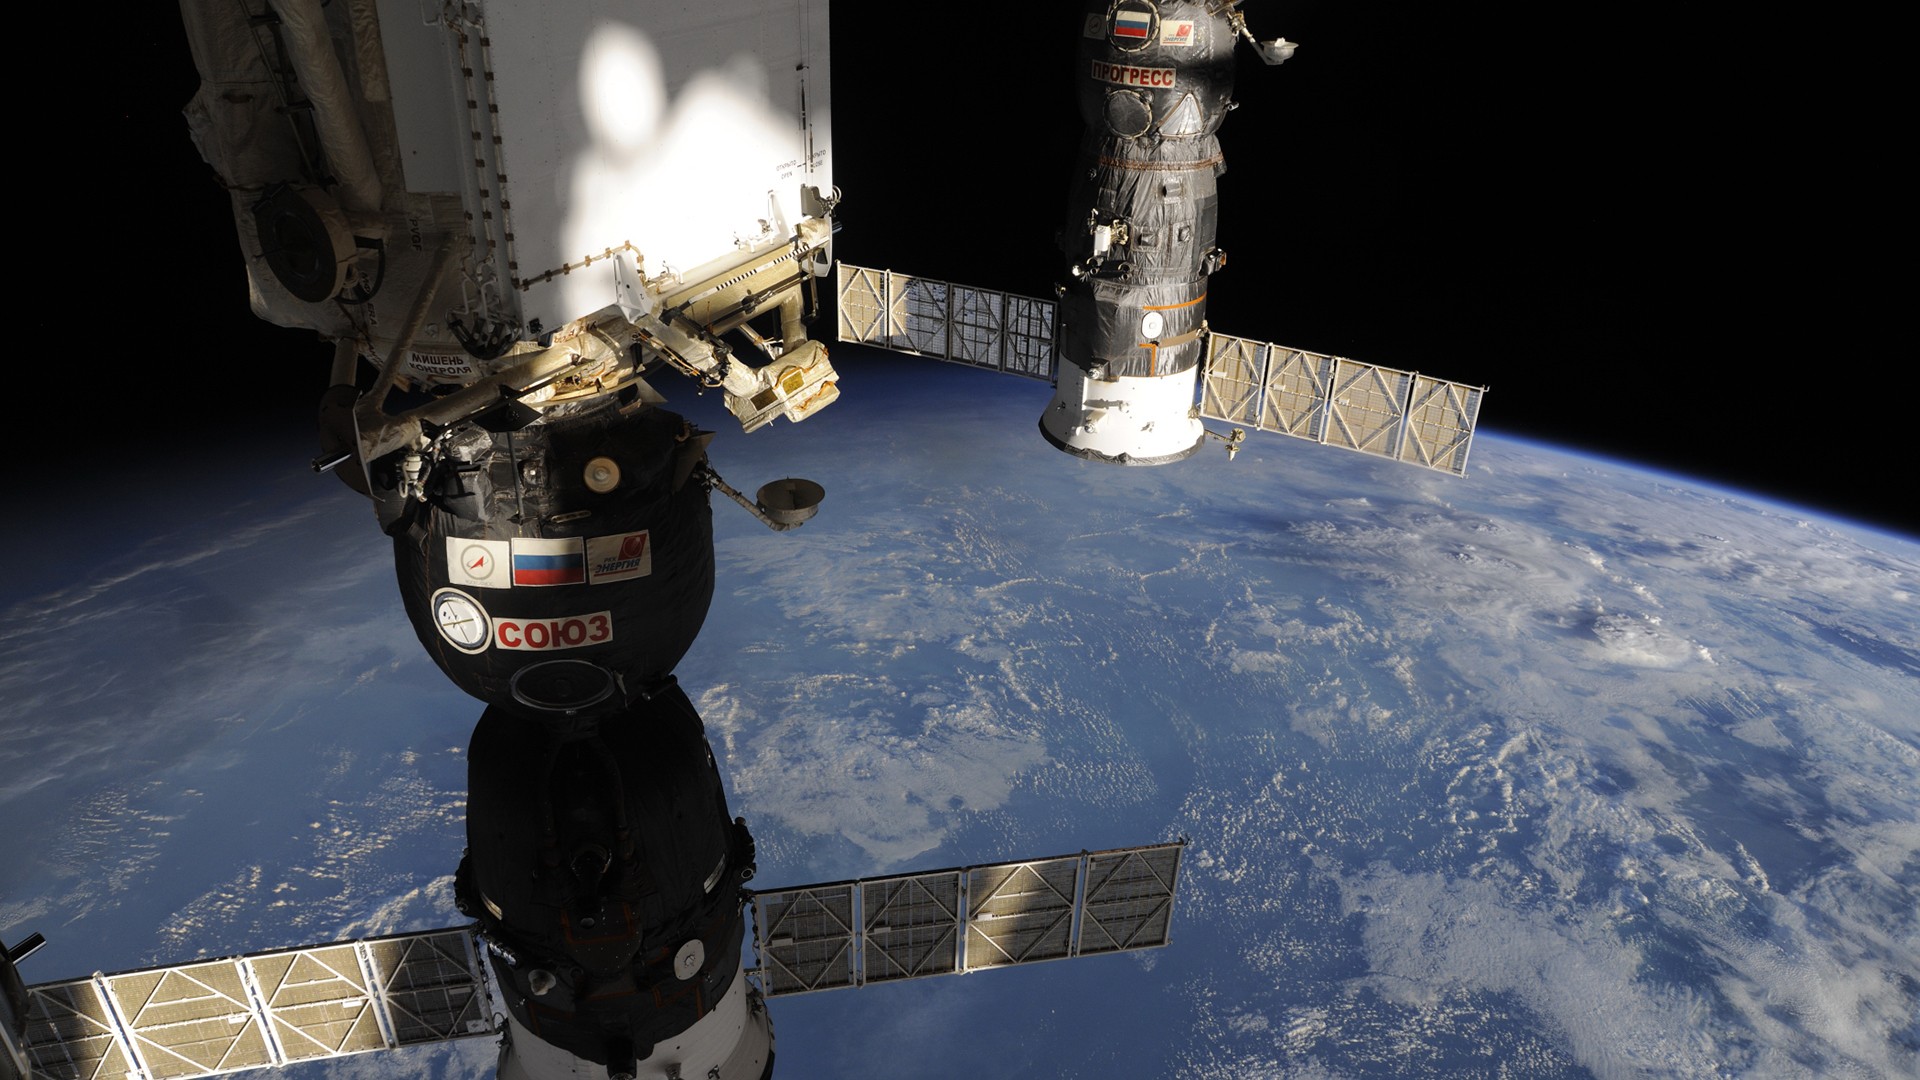 General 1920x1080 International Space Station NASA Progress Soyuz ESA space Earth Roscosmos planet technology